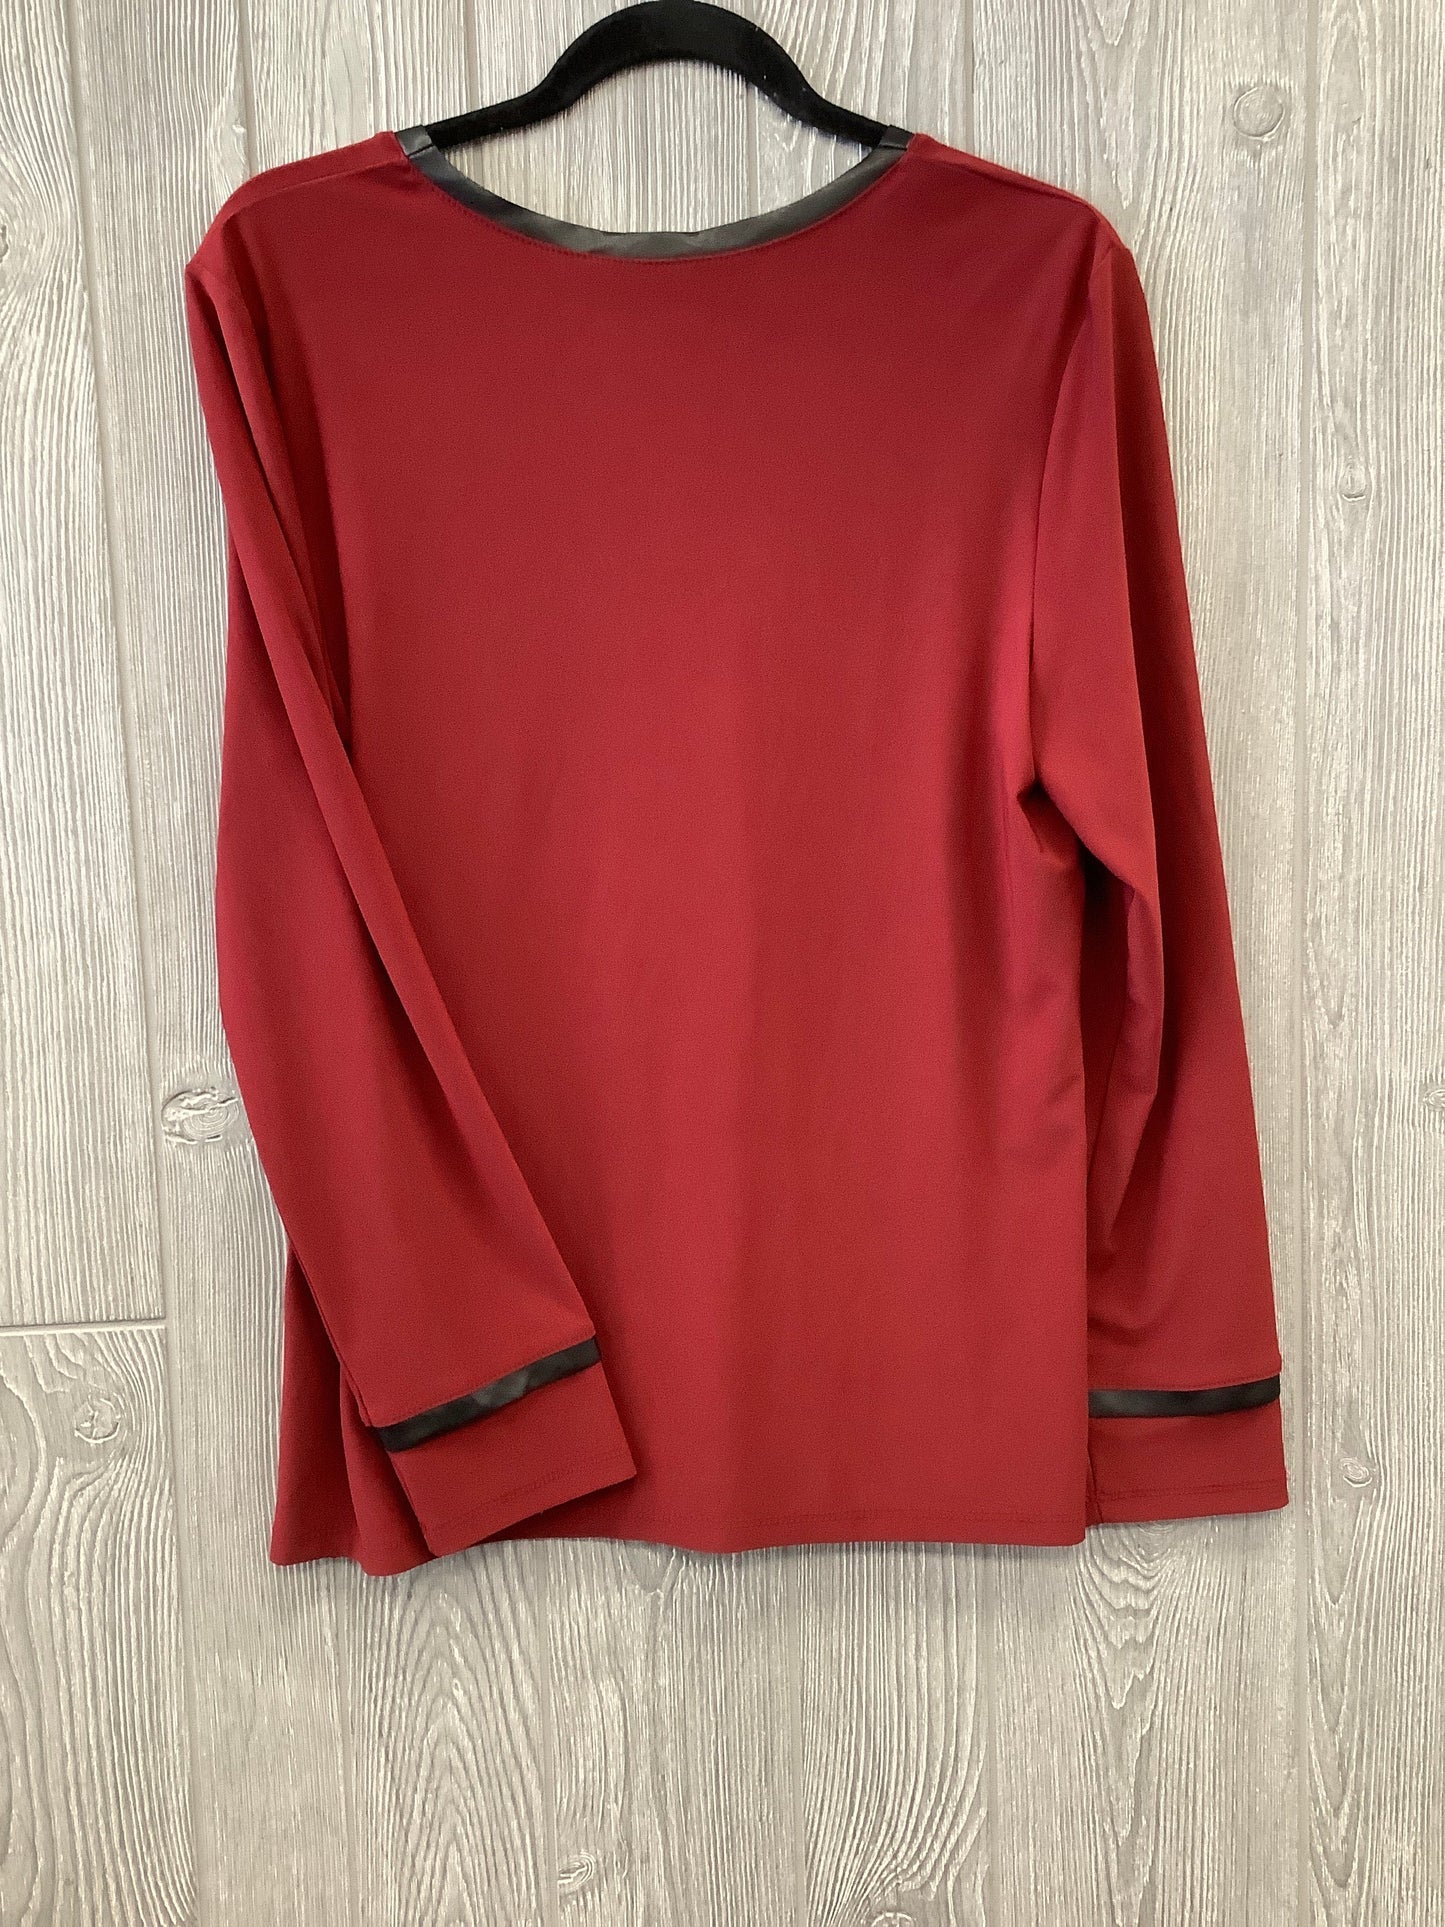 Red Top Long Sleeve Joseph Ribkoff, Size M